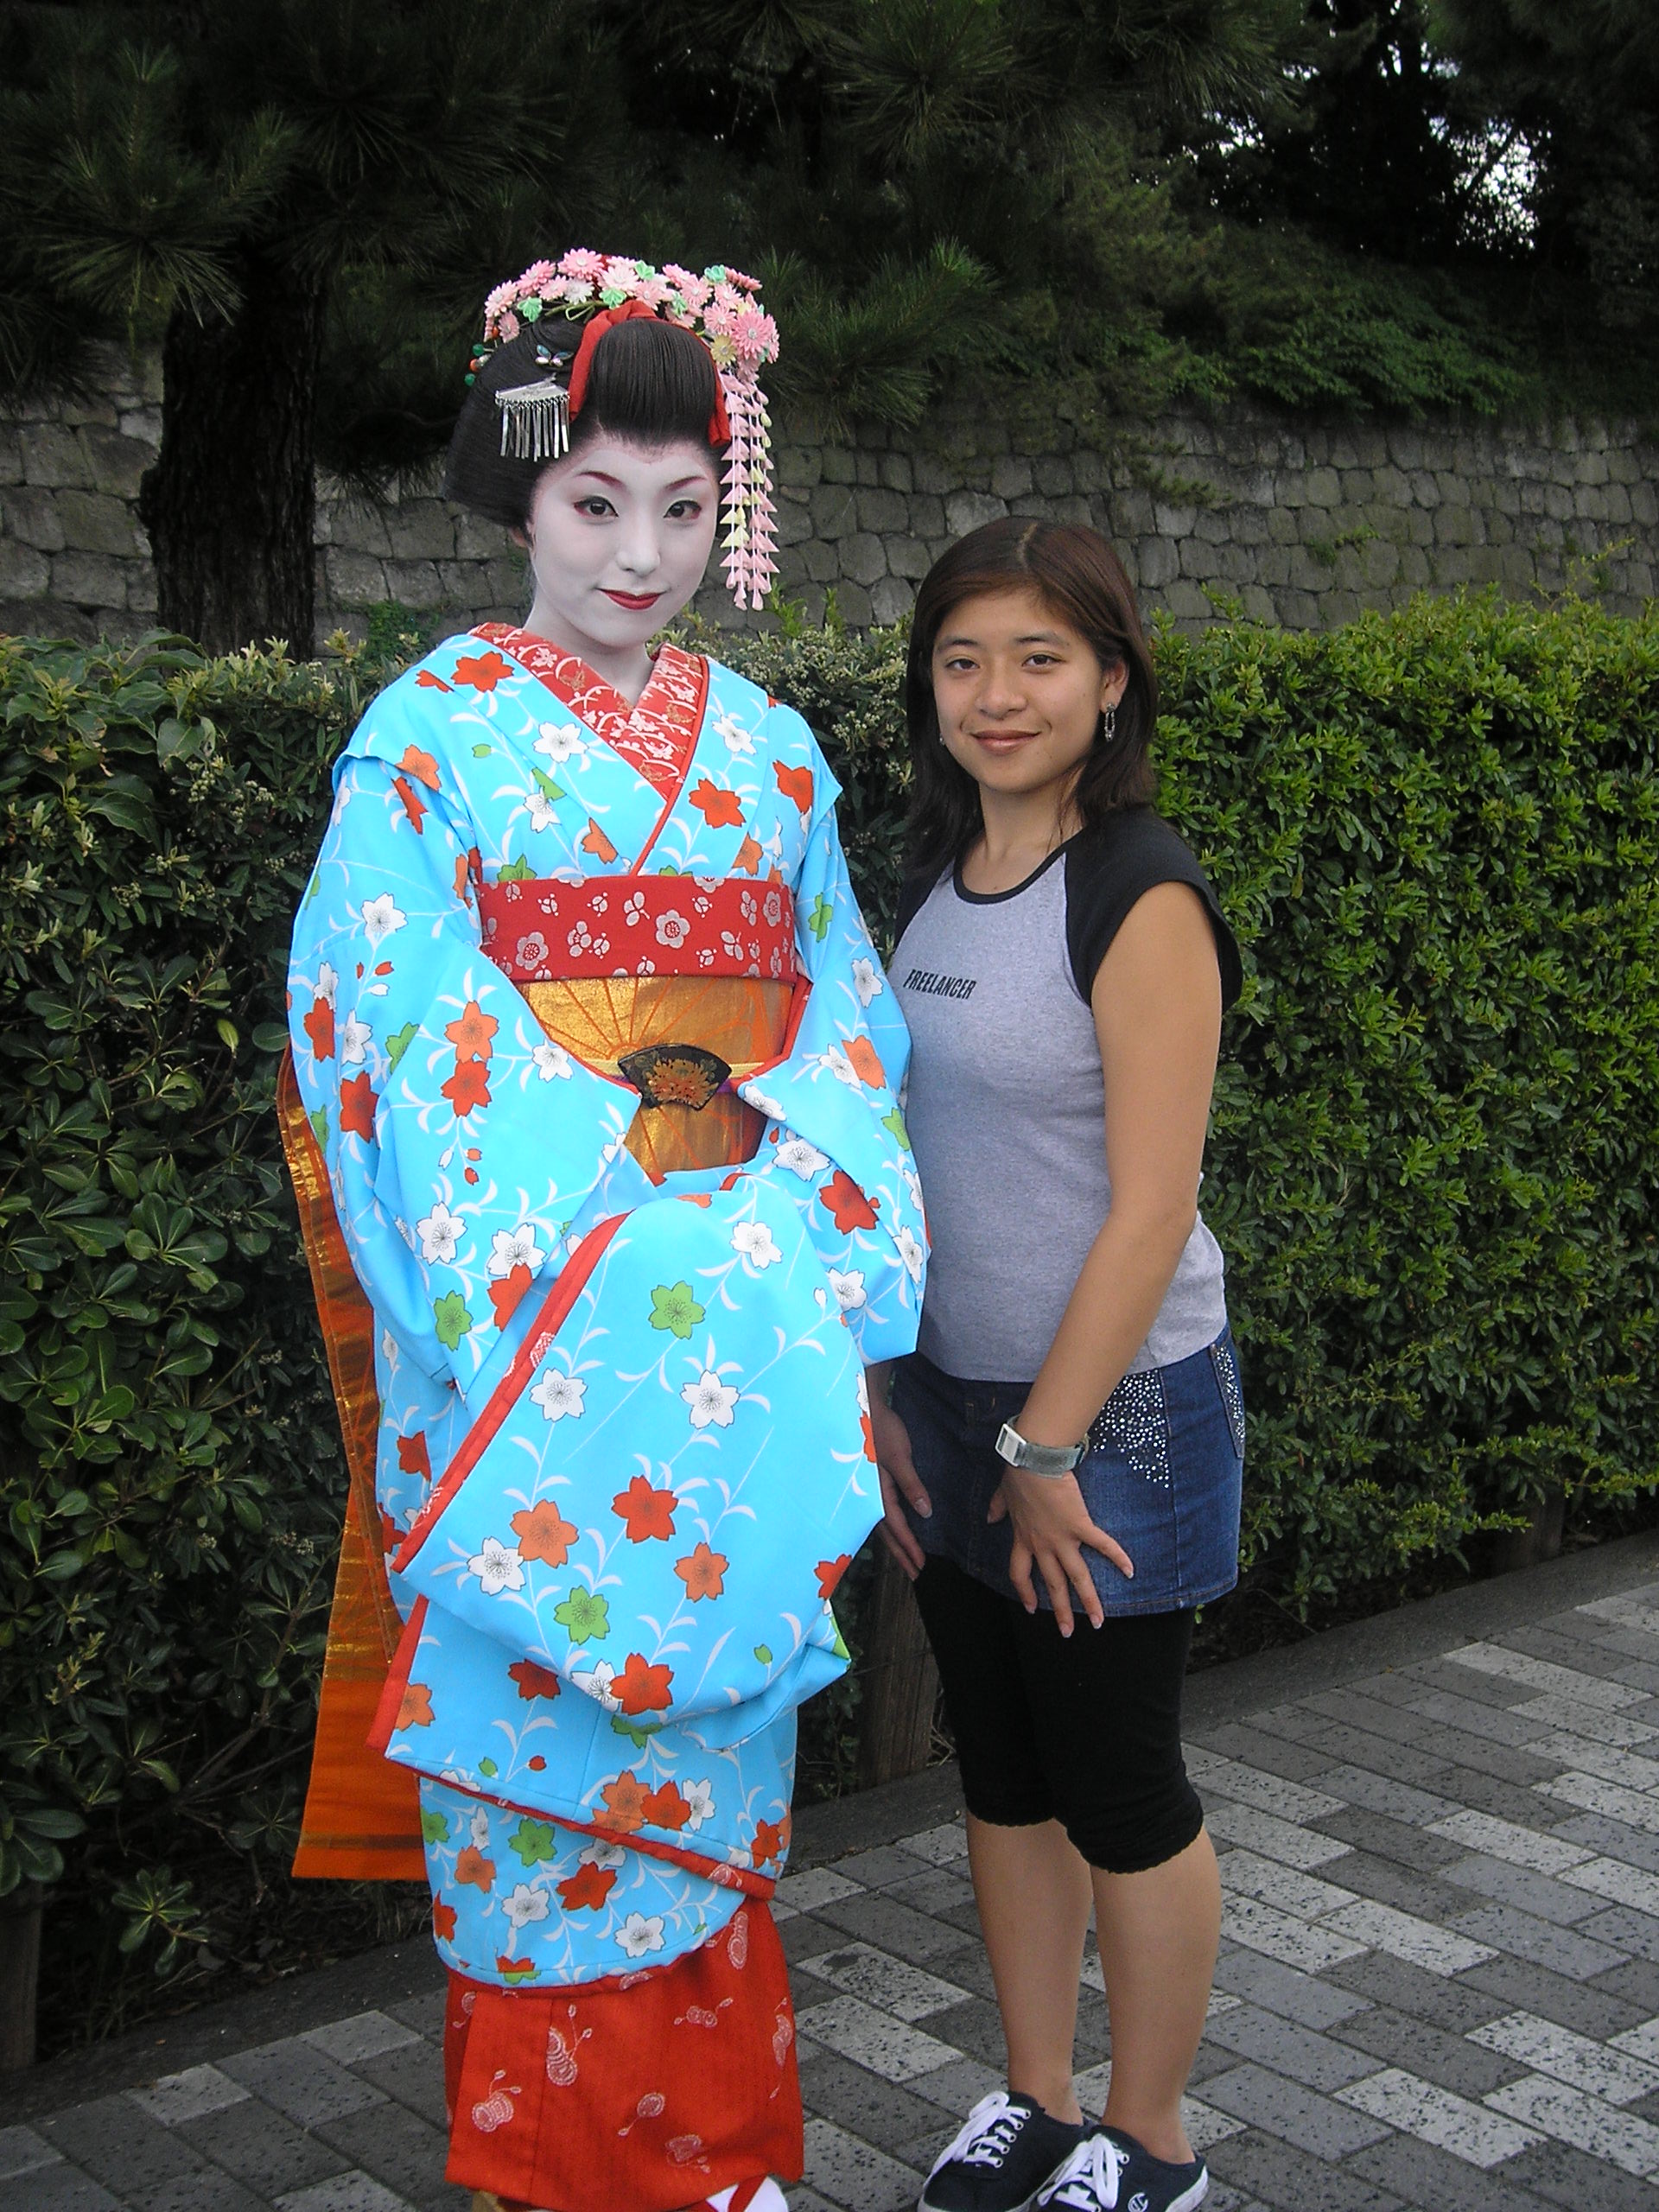 A Geisha and me